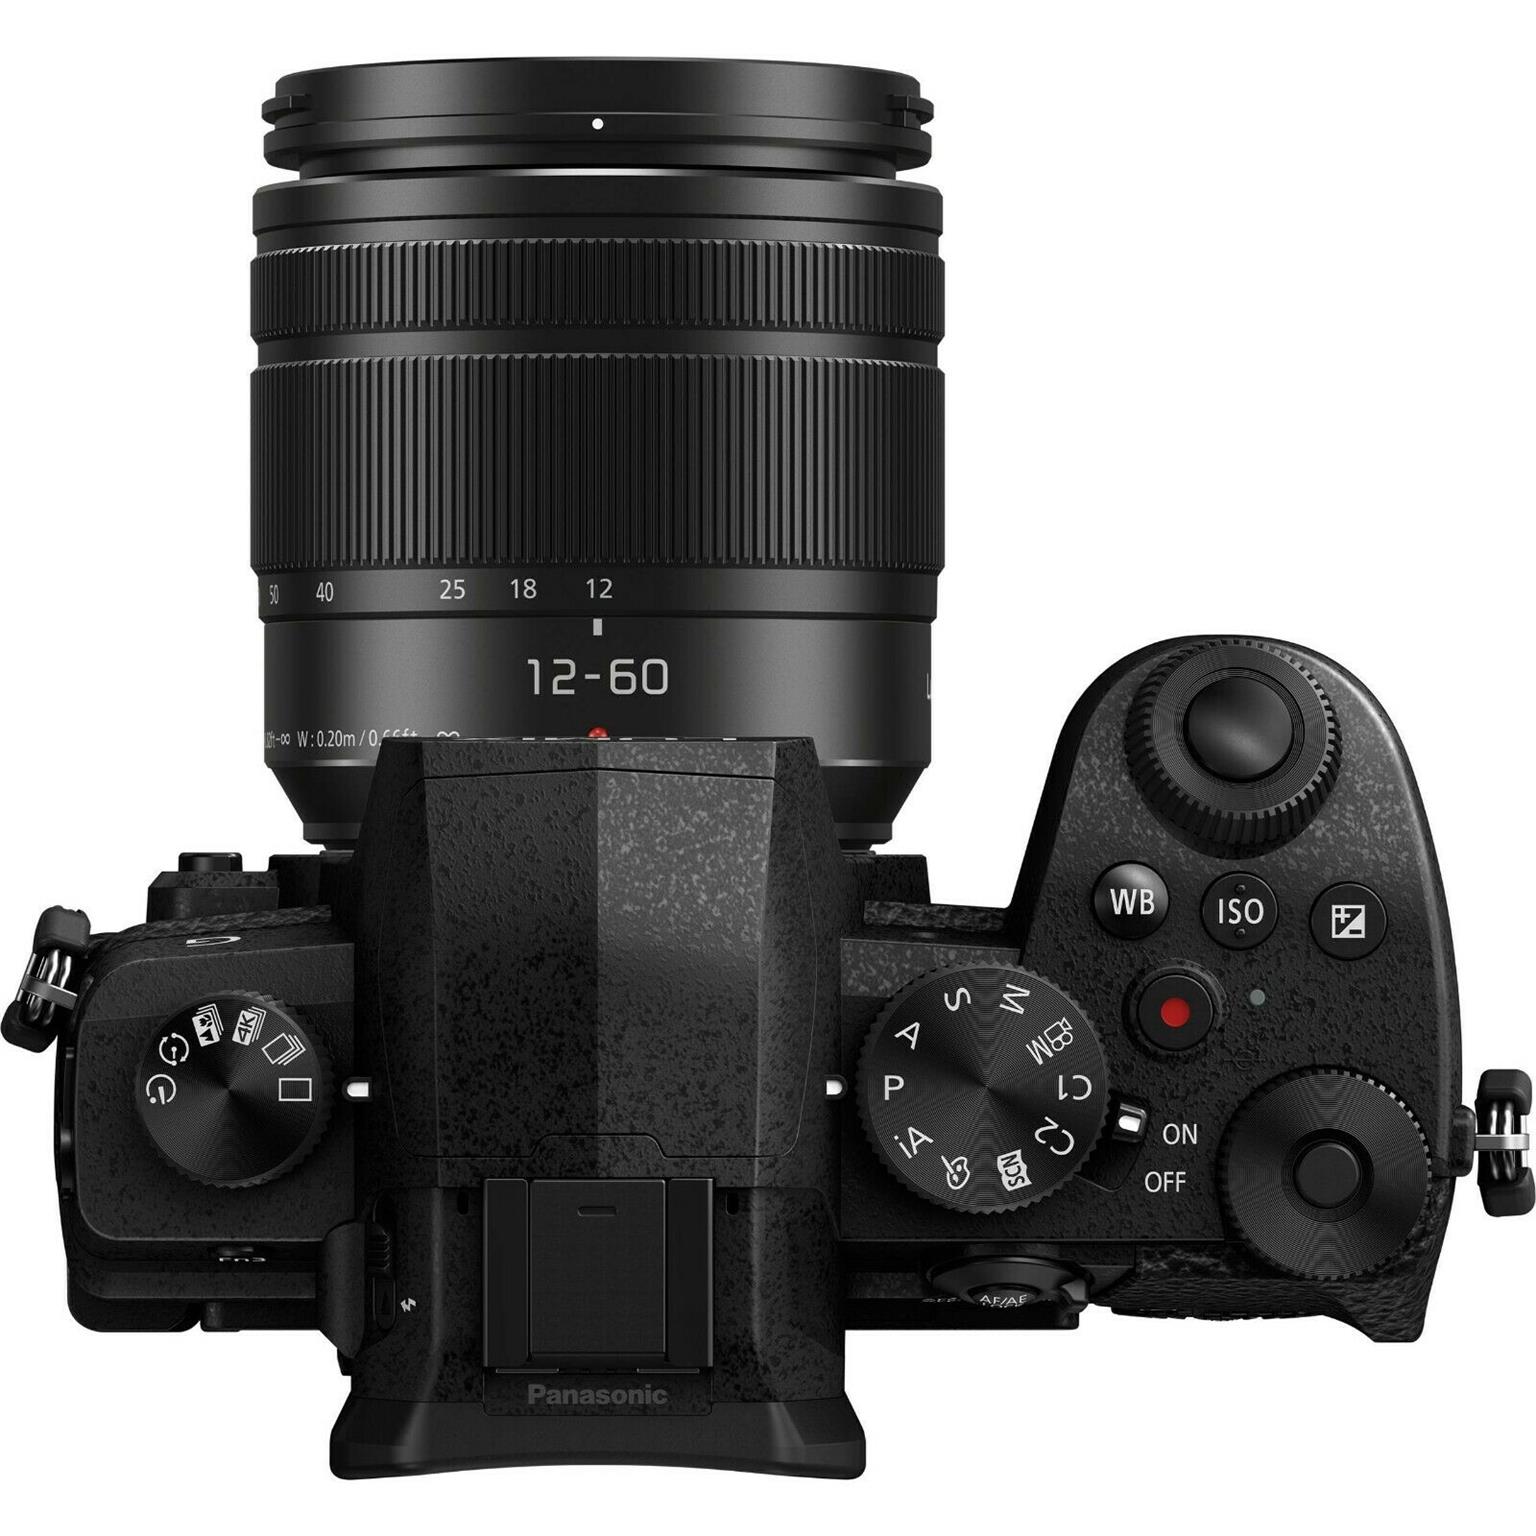 Panasonic G95 with lens